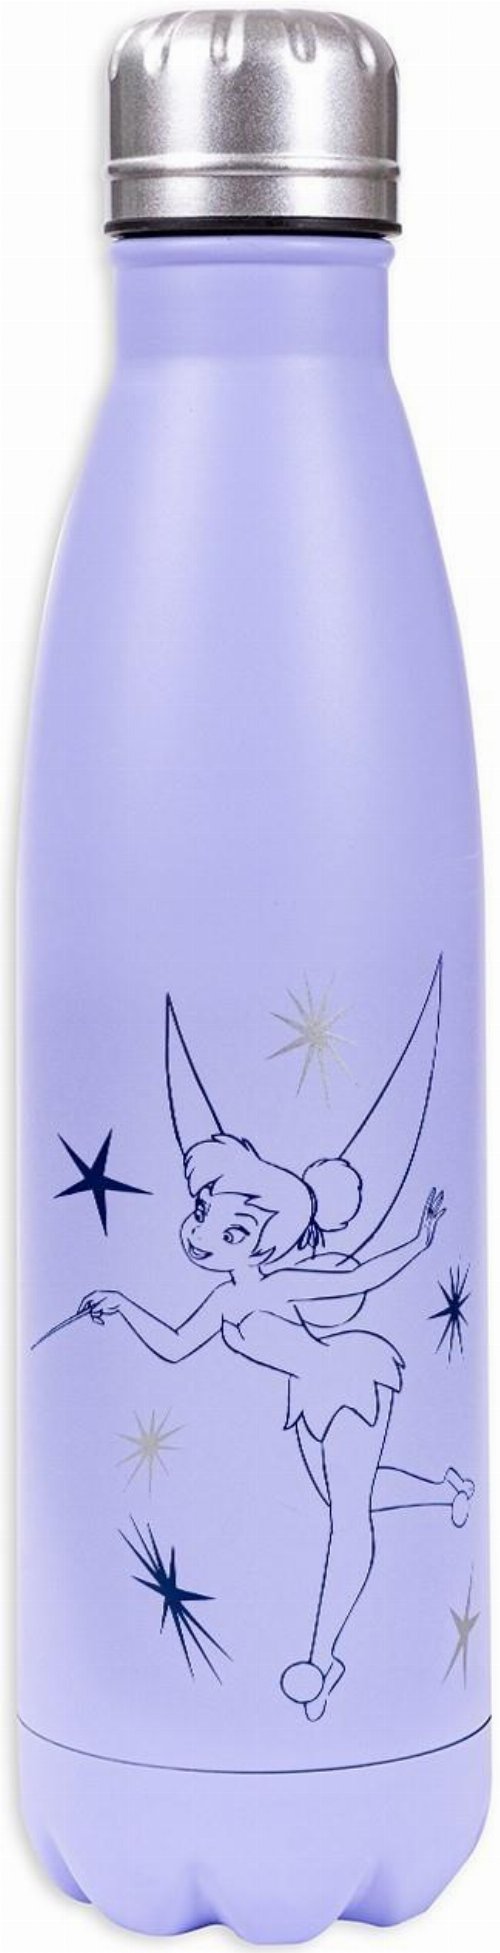 Disney - Tinker Bell Starlight Μπουκάλι Νερού
(540ml)